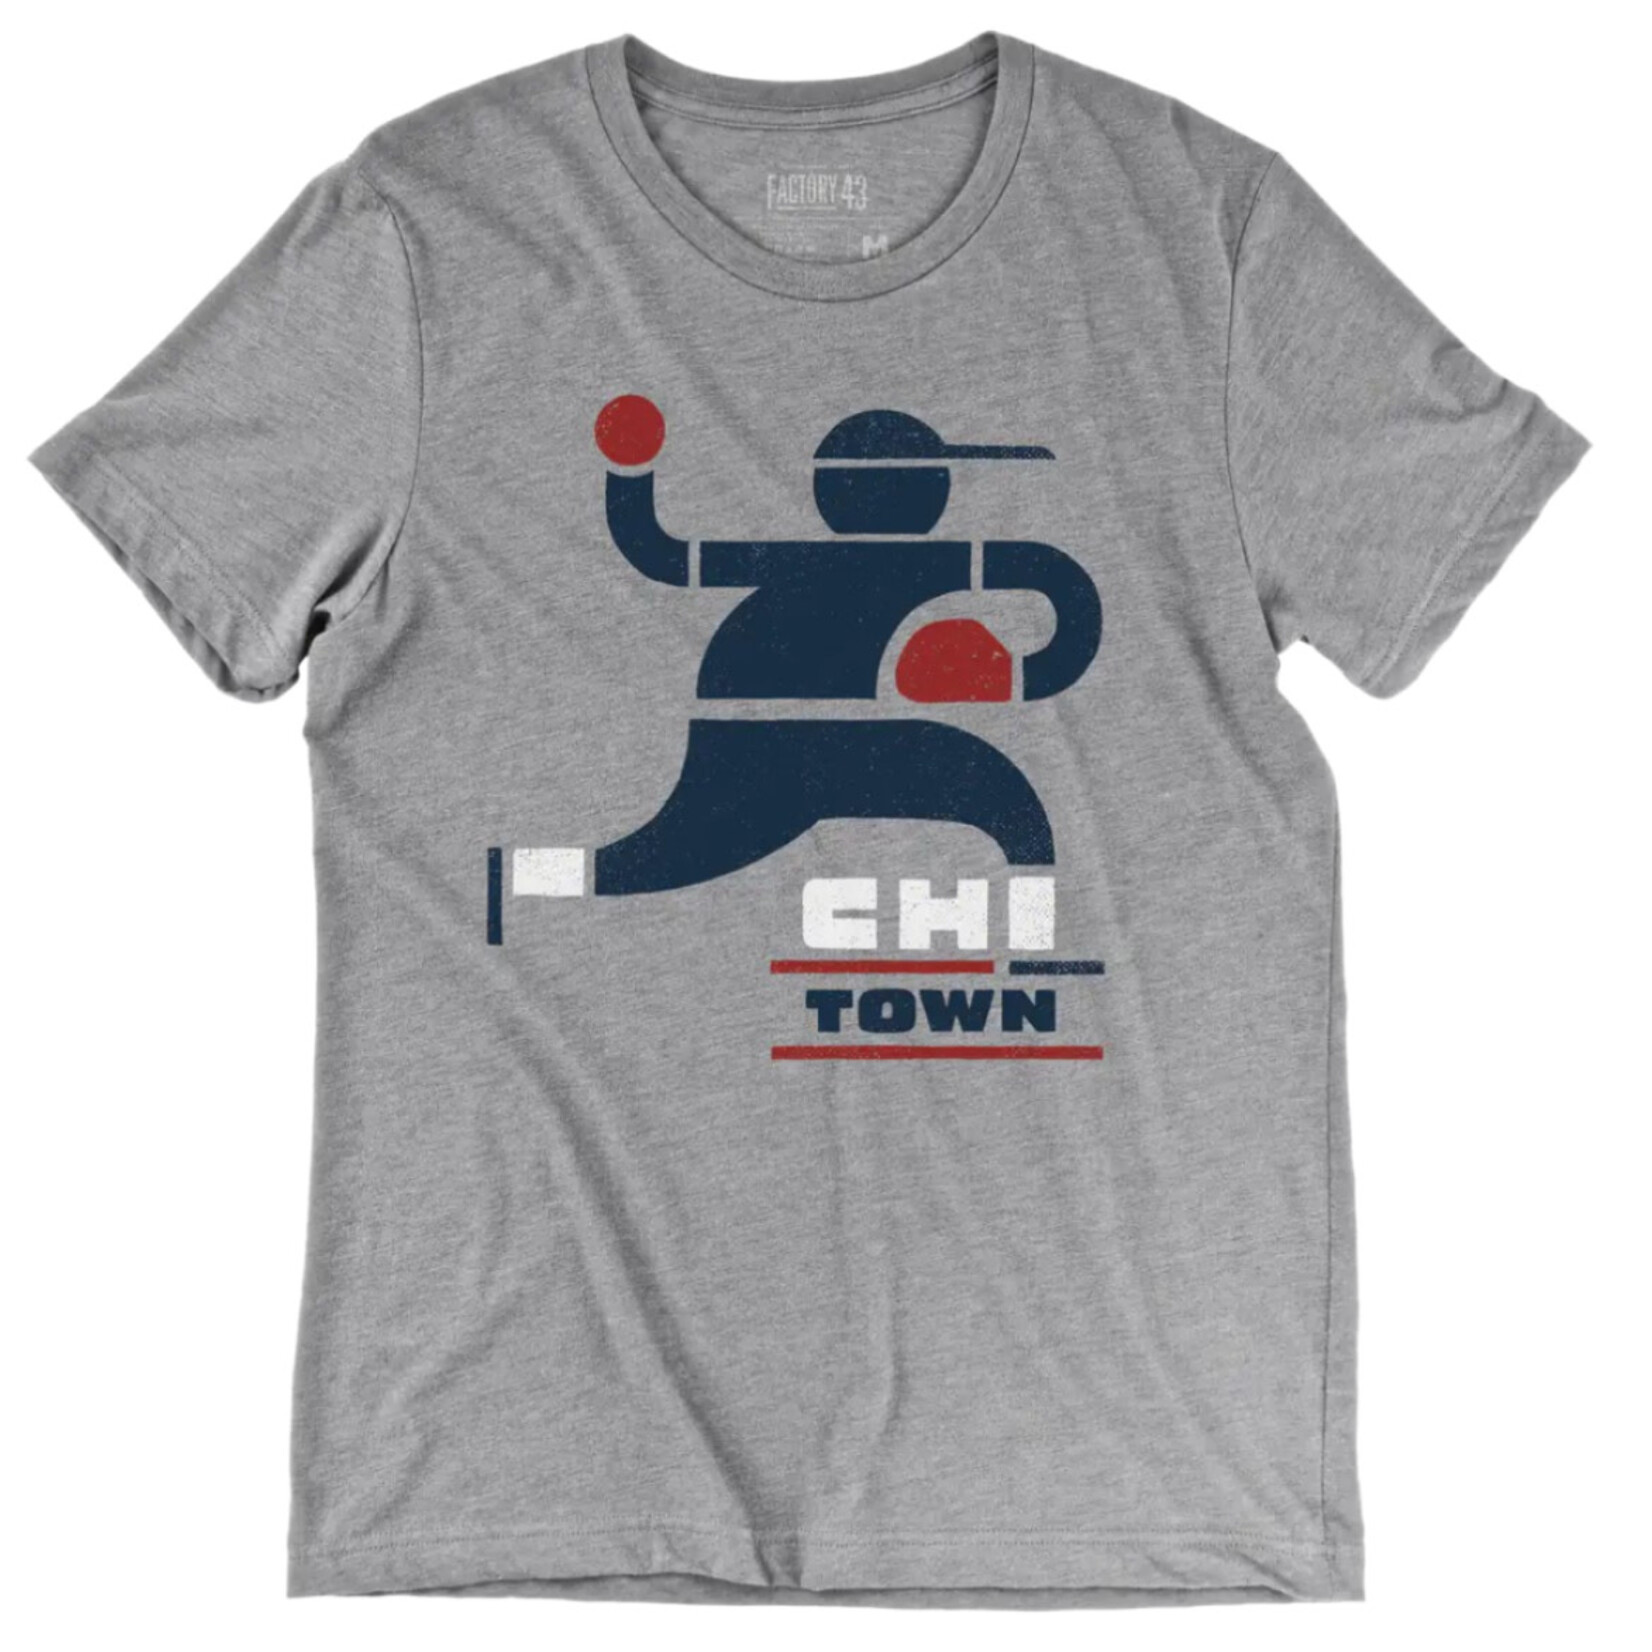 Factory 43 Chi Town Baseball T-Shirt